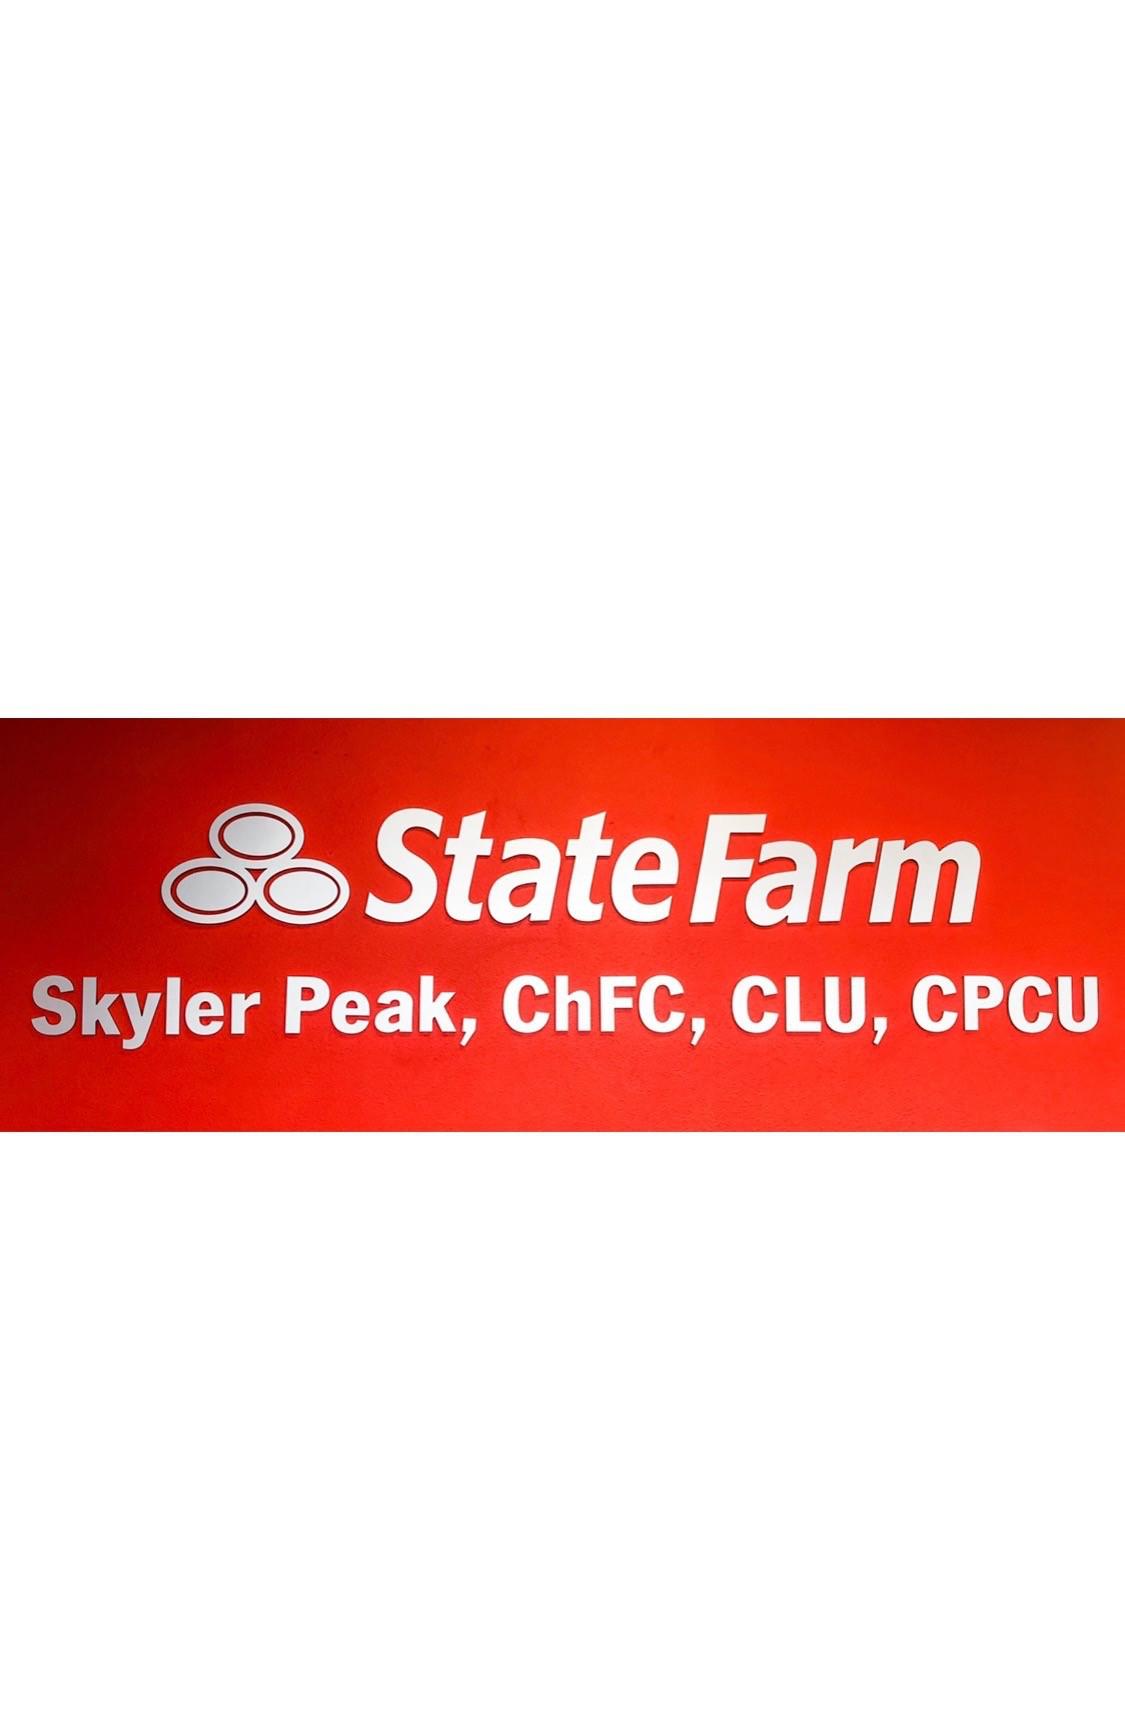 Skyler Peak State Farm agency sign